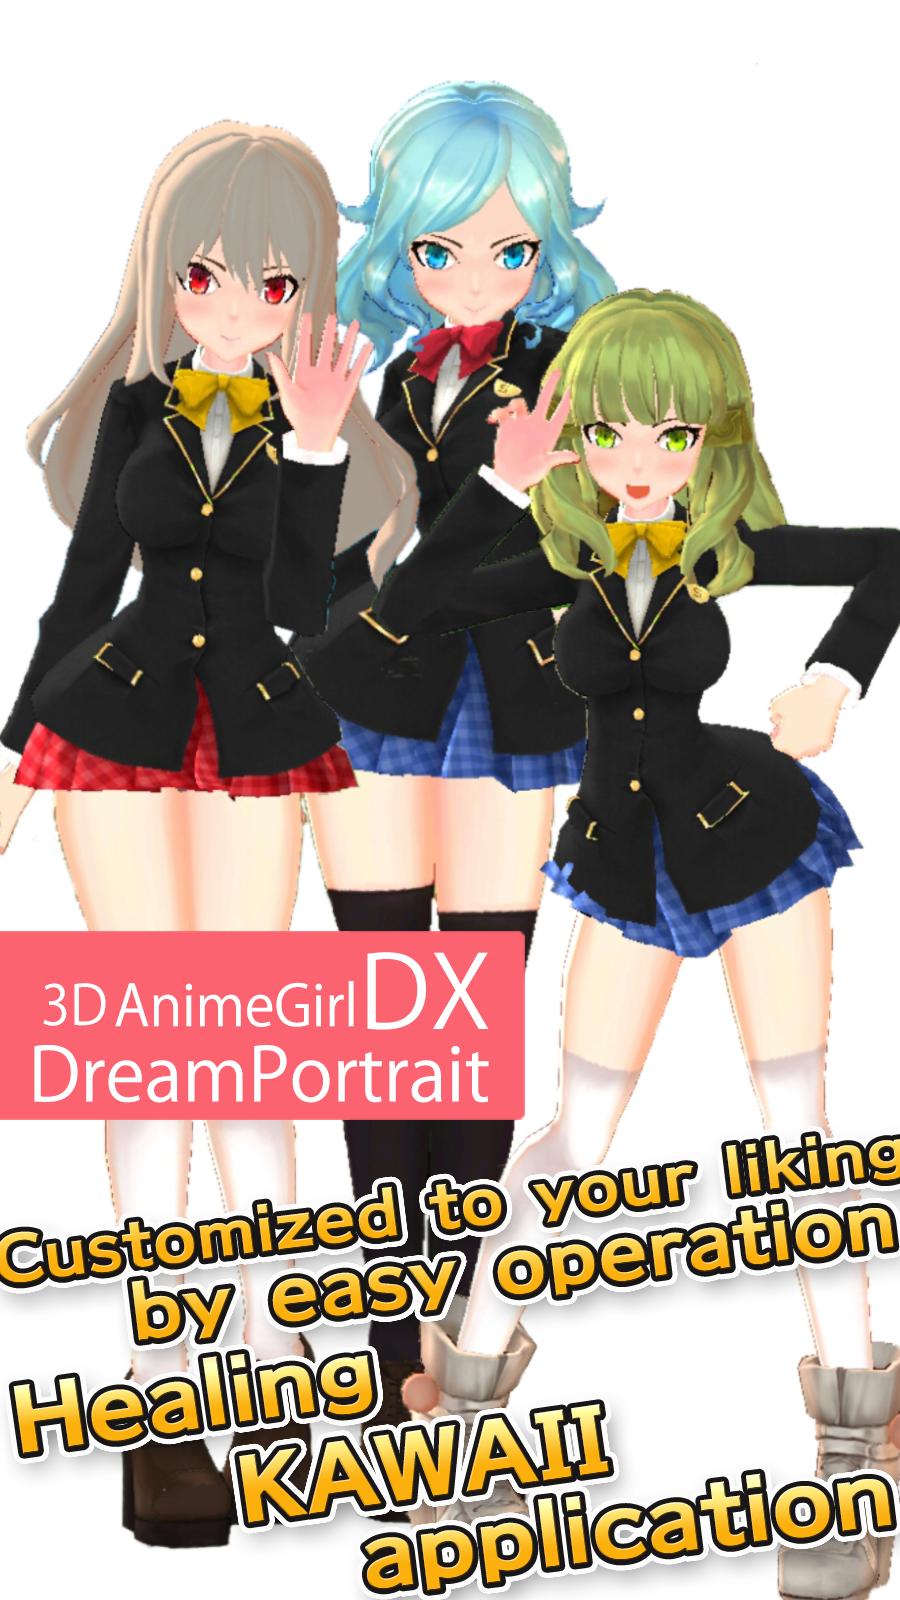 3DAnimeGirl for Android - APK Download